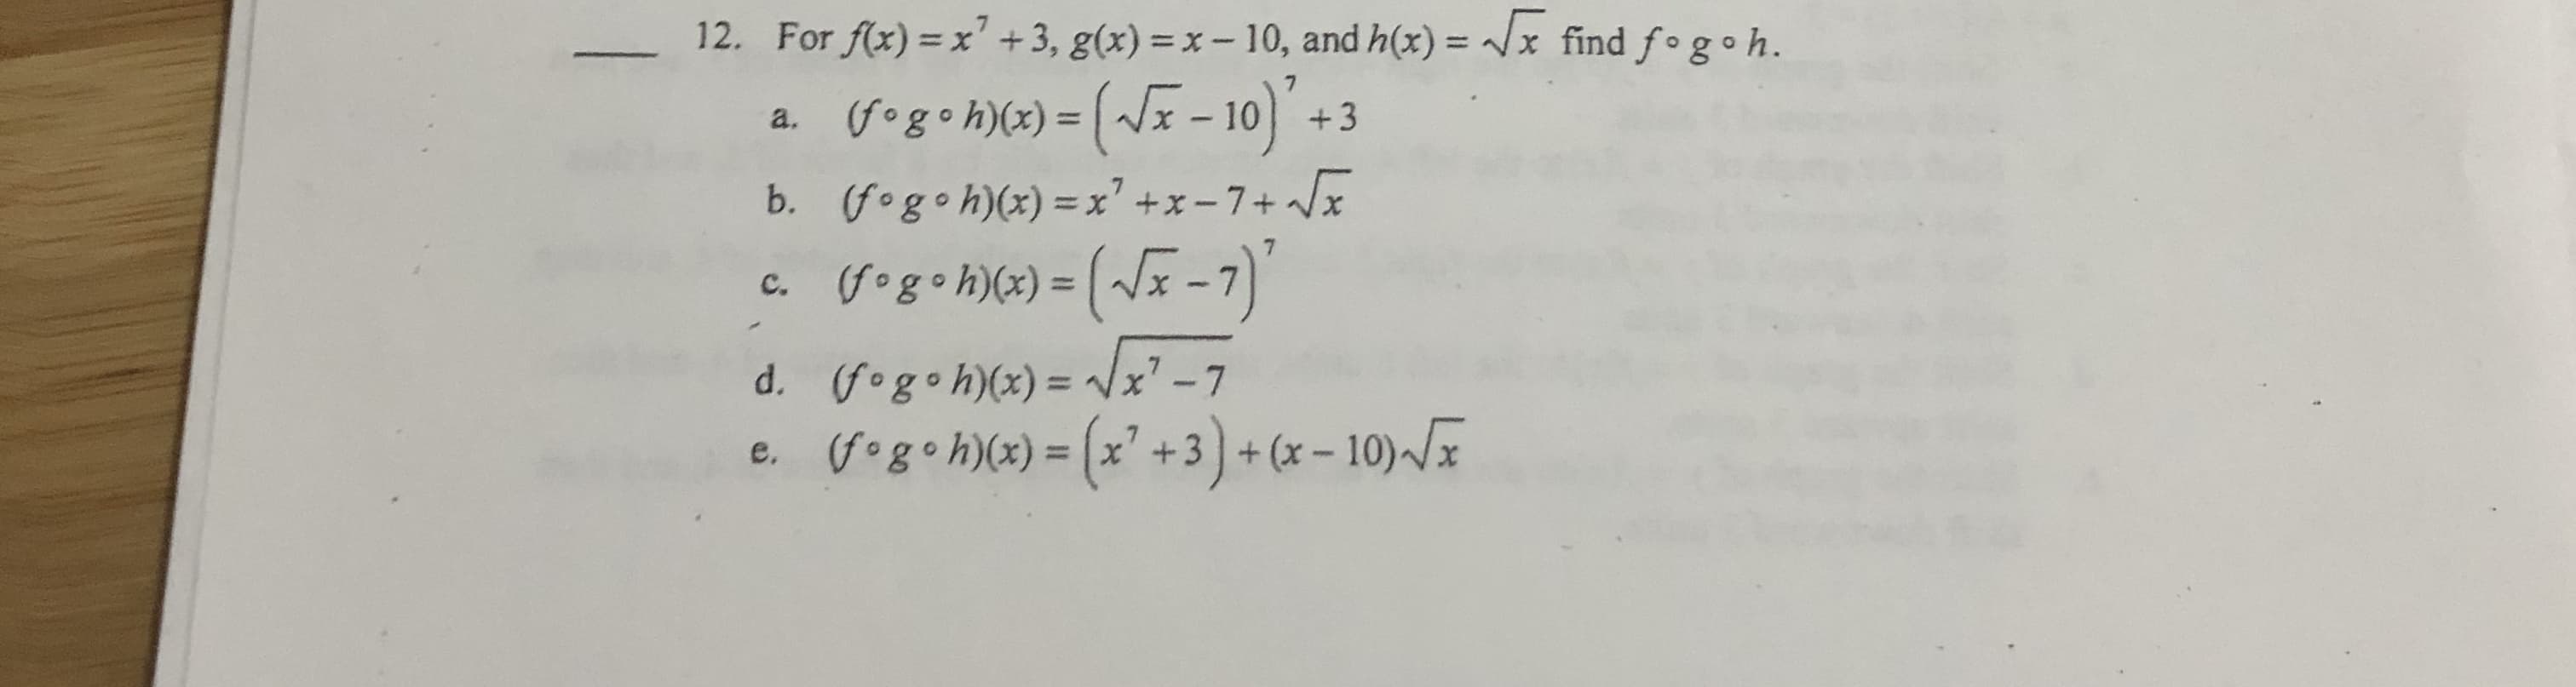 12. For f(x) = x' +3, g(x) = x – 10, and h(x) = /x find f°g•h.
%3D
Gogo h\(x) = (~x - 10) +3
a.
|3|
(fogoh)(x) =x' +x-7+ x
b.
c. (fog•h)(x) = (/x -7)
x' -7
d. (fogo h)(x) =
%3D
G•g• h\(x) = (x° +3) + (x - 10)-/I
%3D
